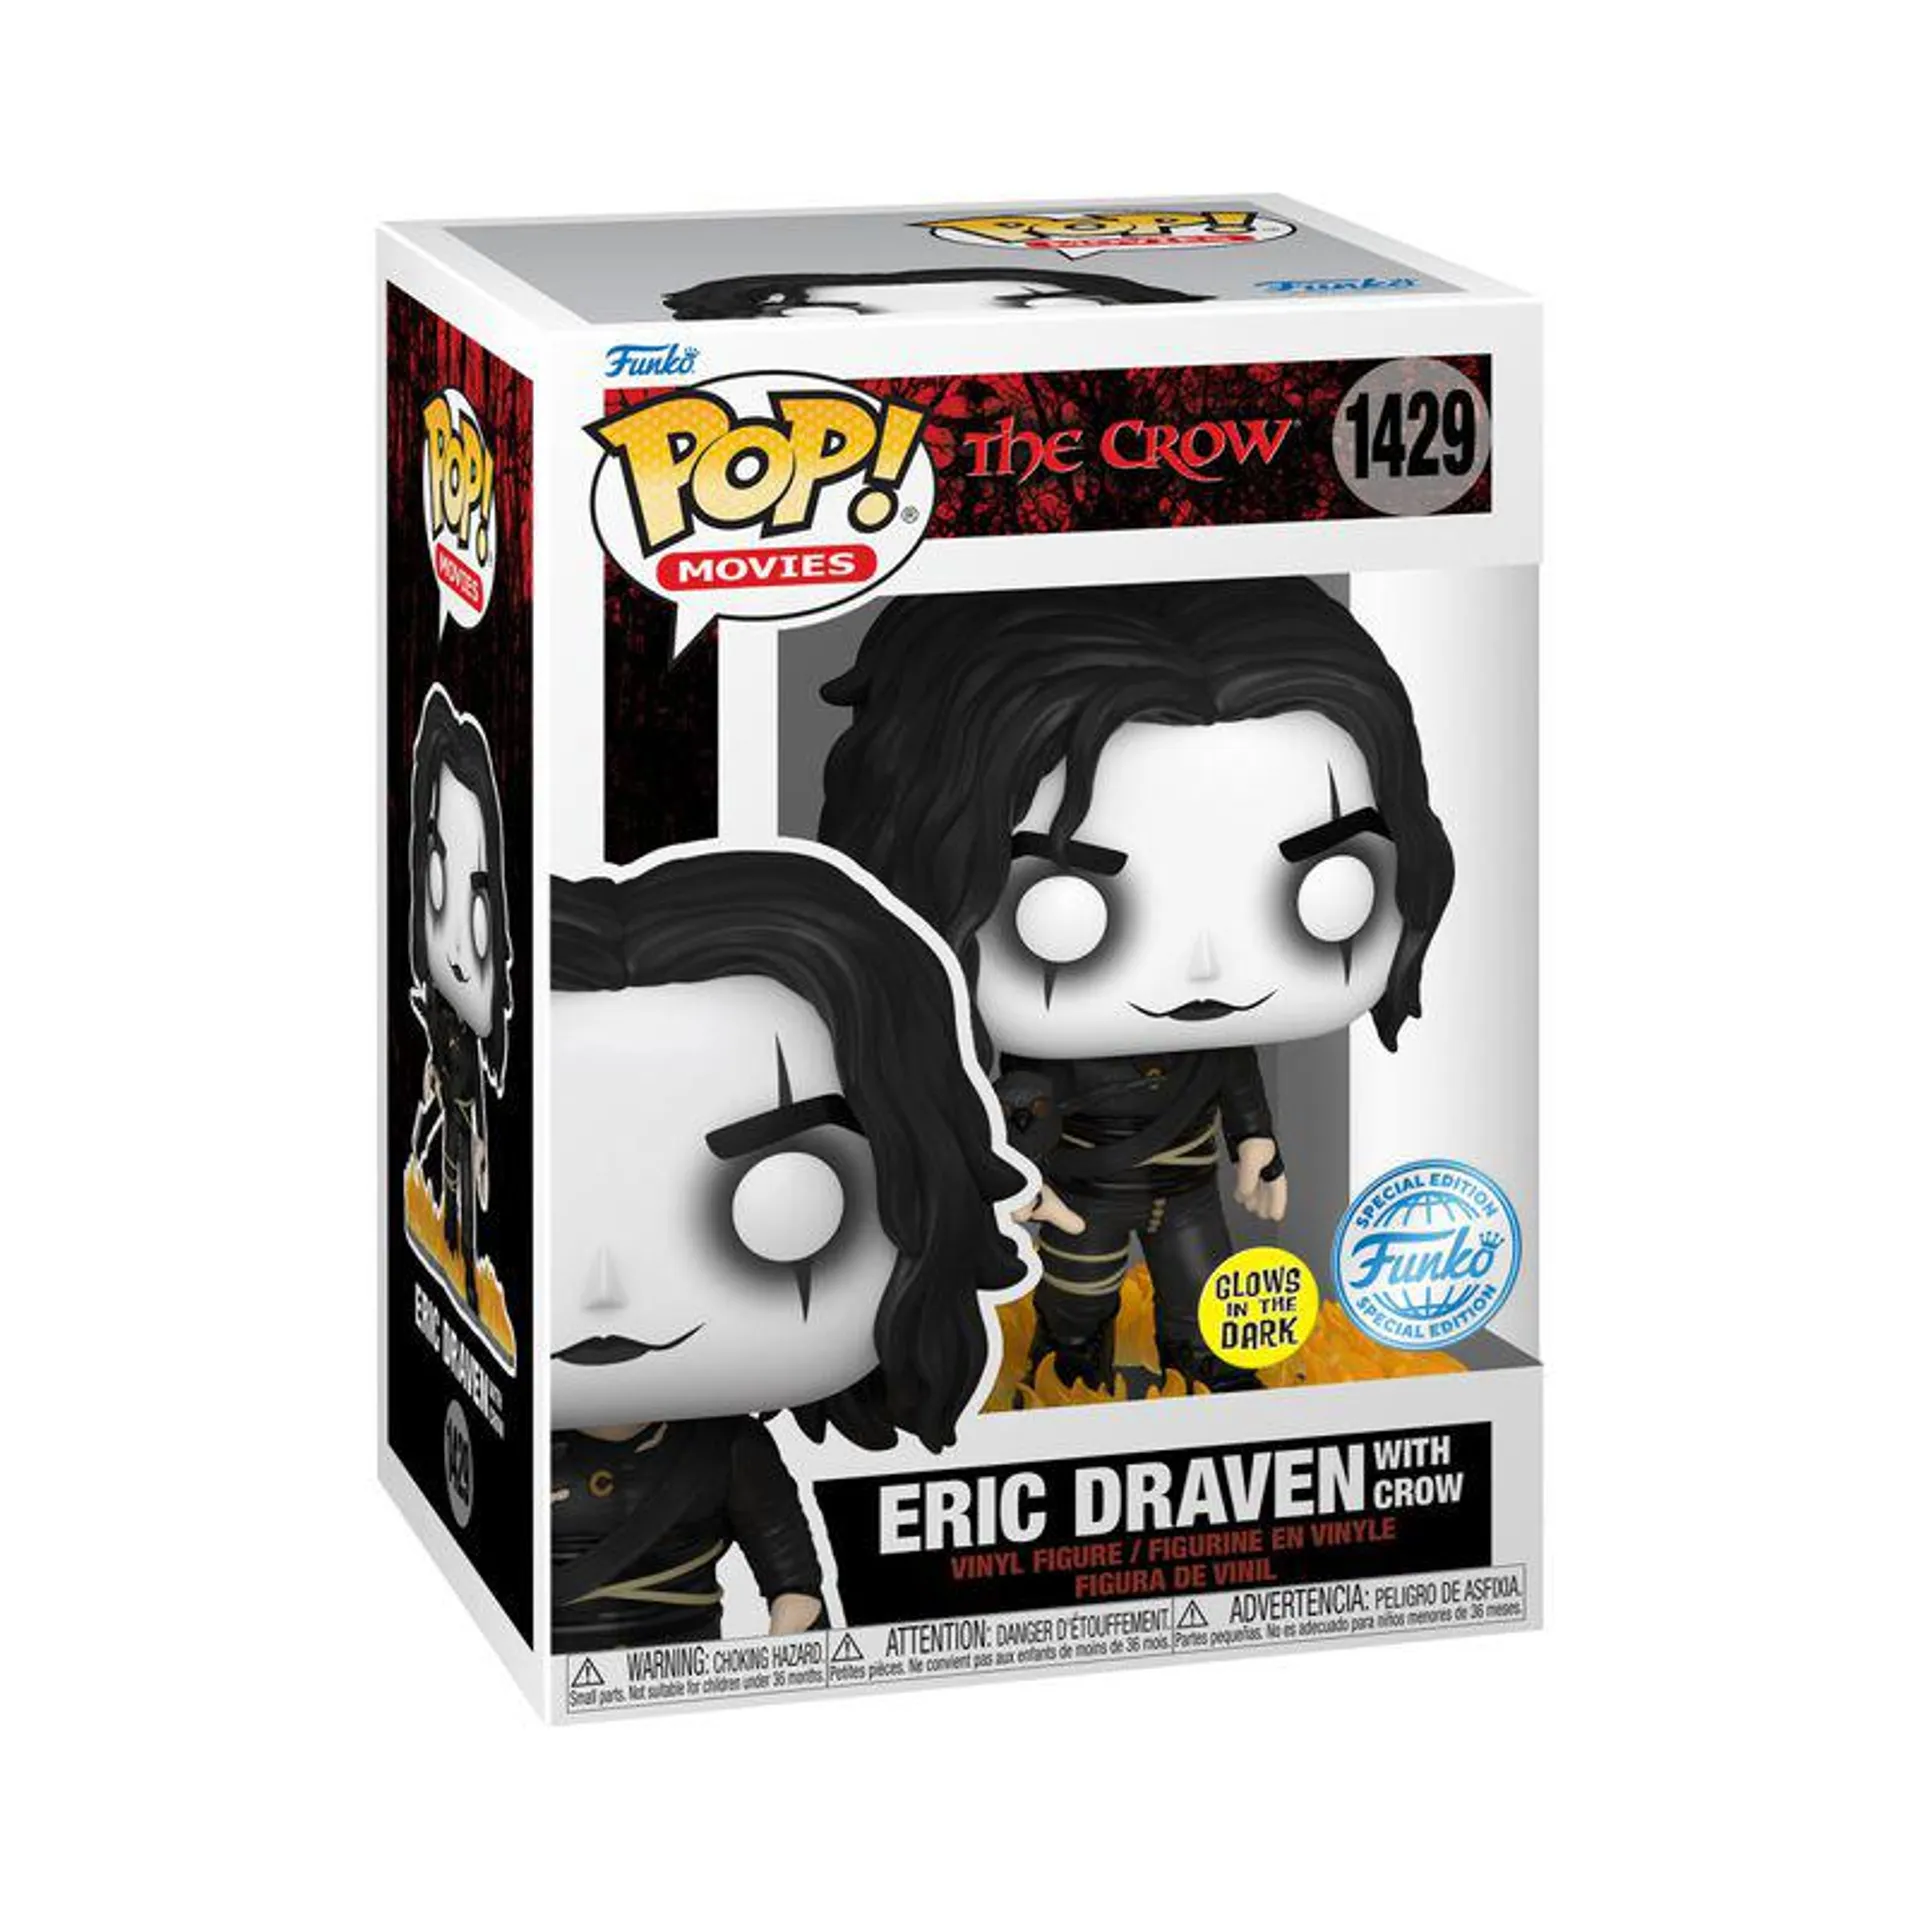 Eric Draven with Crow (Glow in the Dark) Vinyl Figurine 1429 | Funko Pop! | multicolore | The Crow